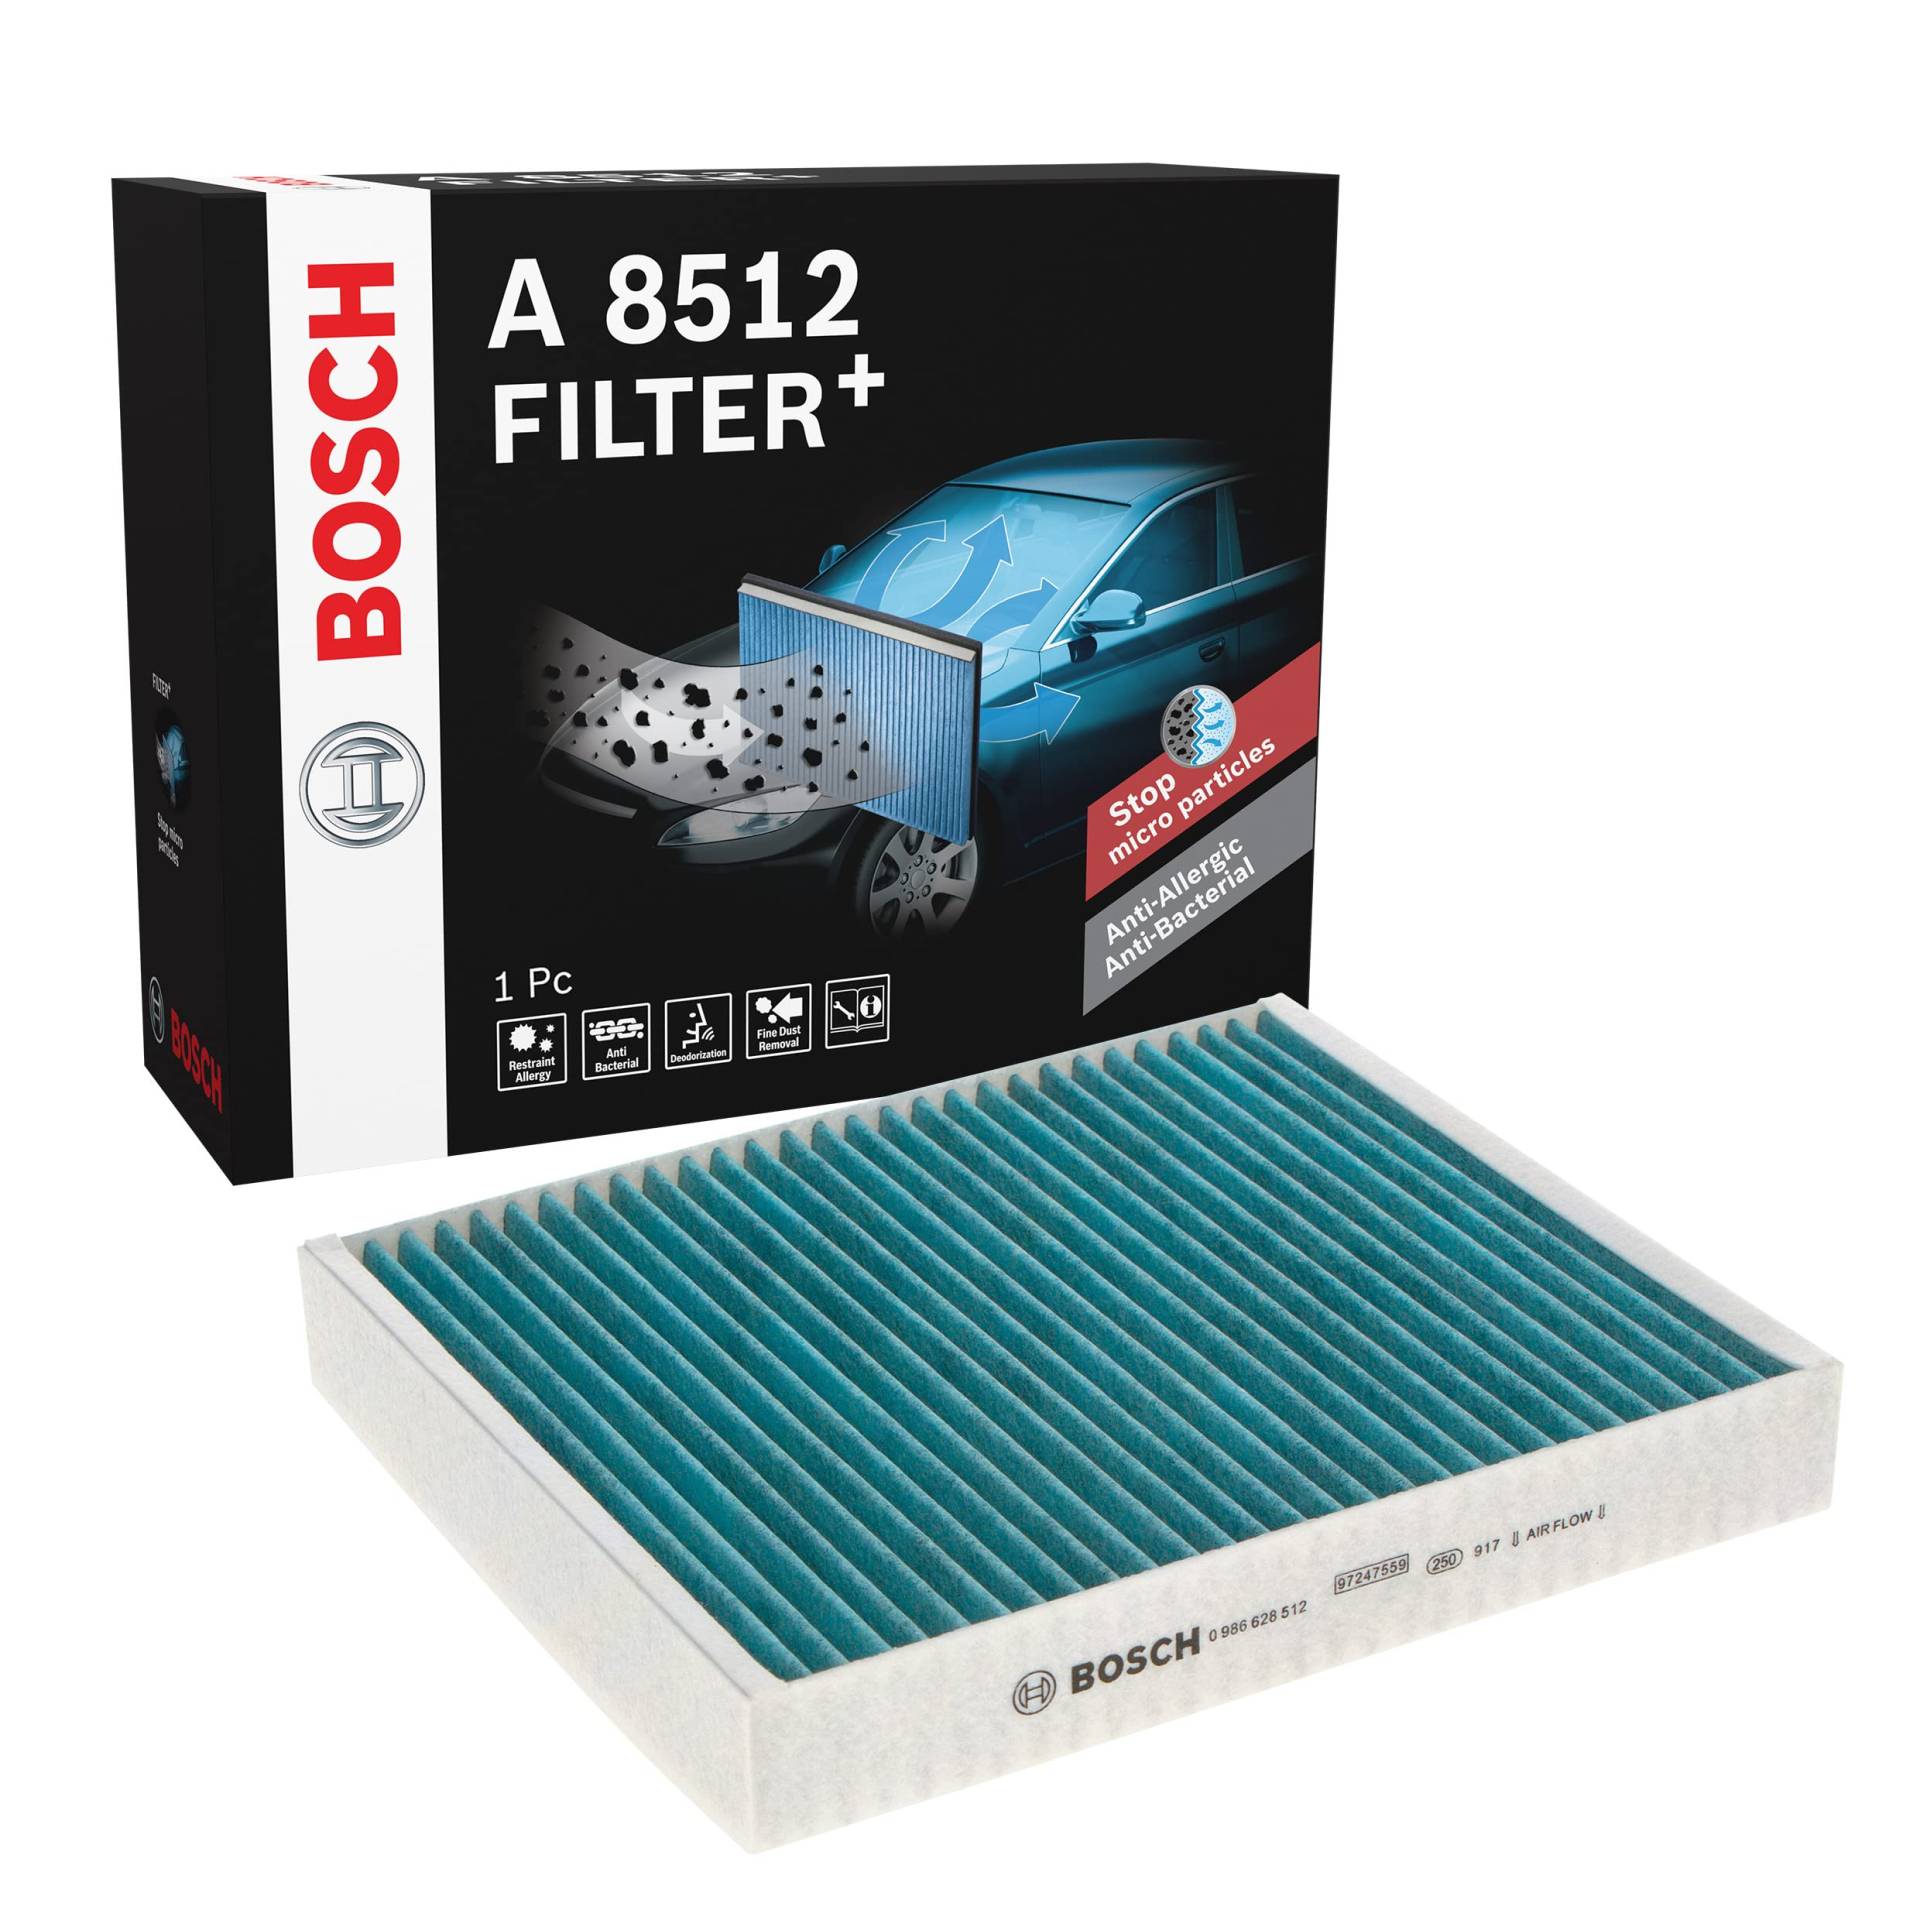 Bosch A8512 - Innenraumfilter Filter+ von Bosch Automotive